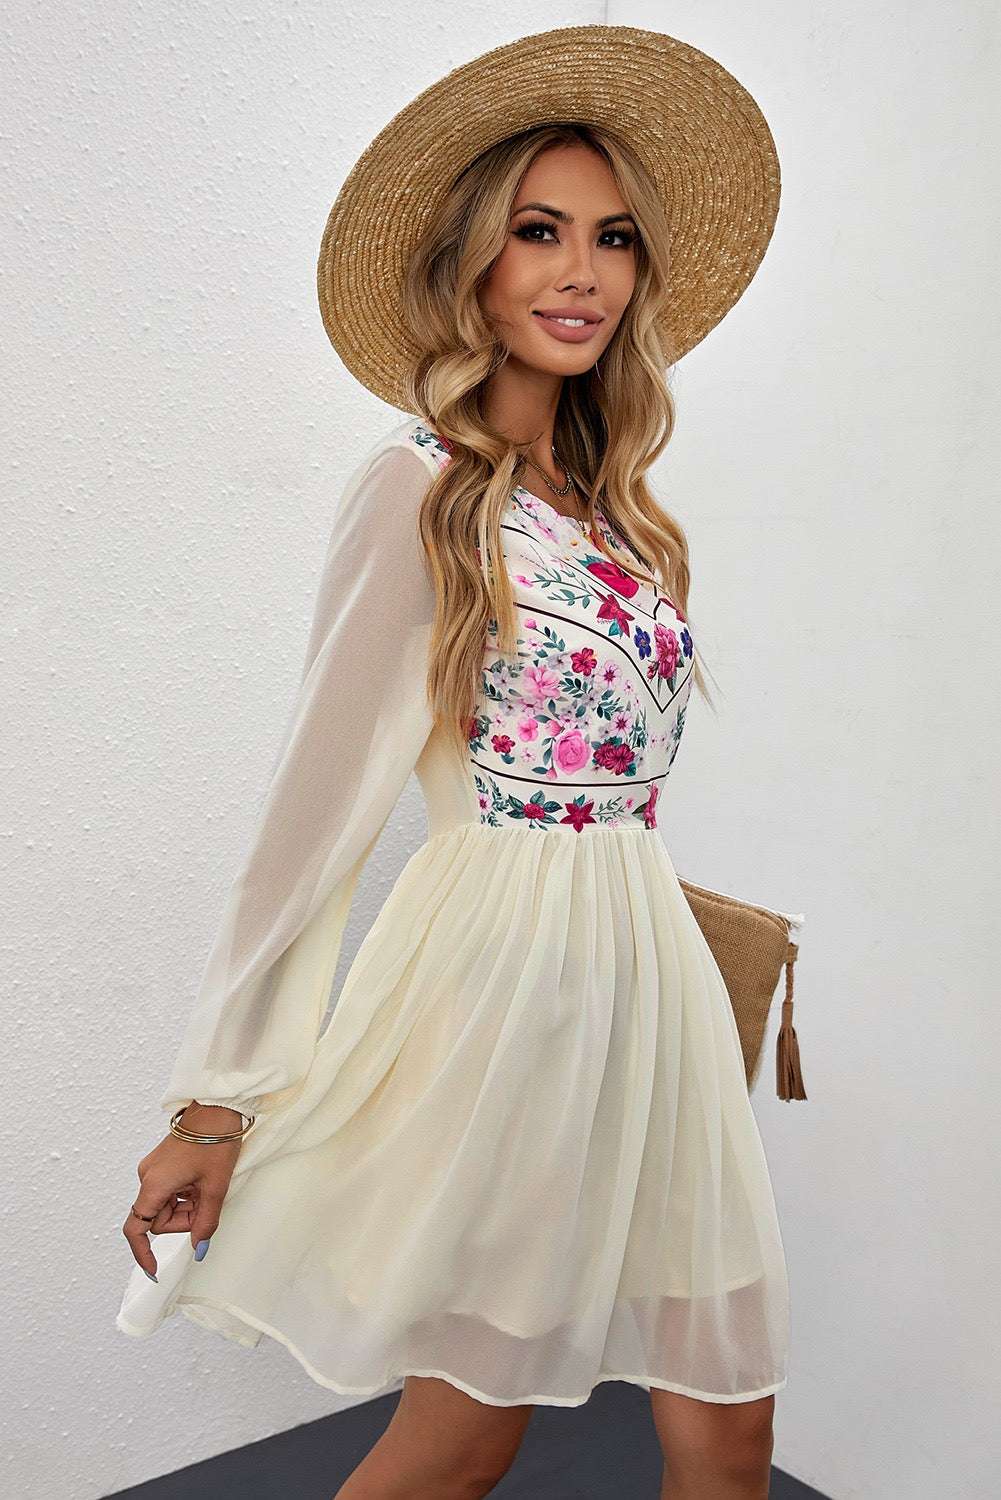 Floral Mesh Sleeve Lined Dress - Shop women apparel, Jewelry, bath & beauty products online - Arwen's Boutique